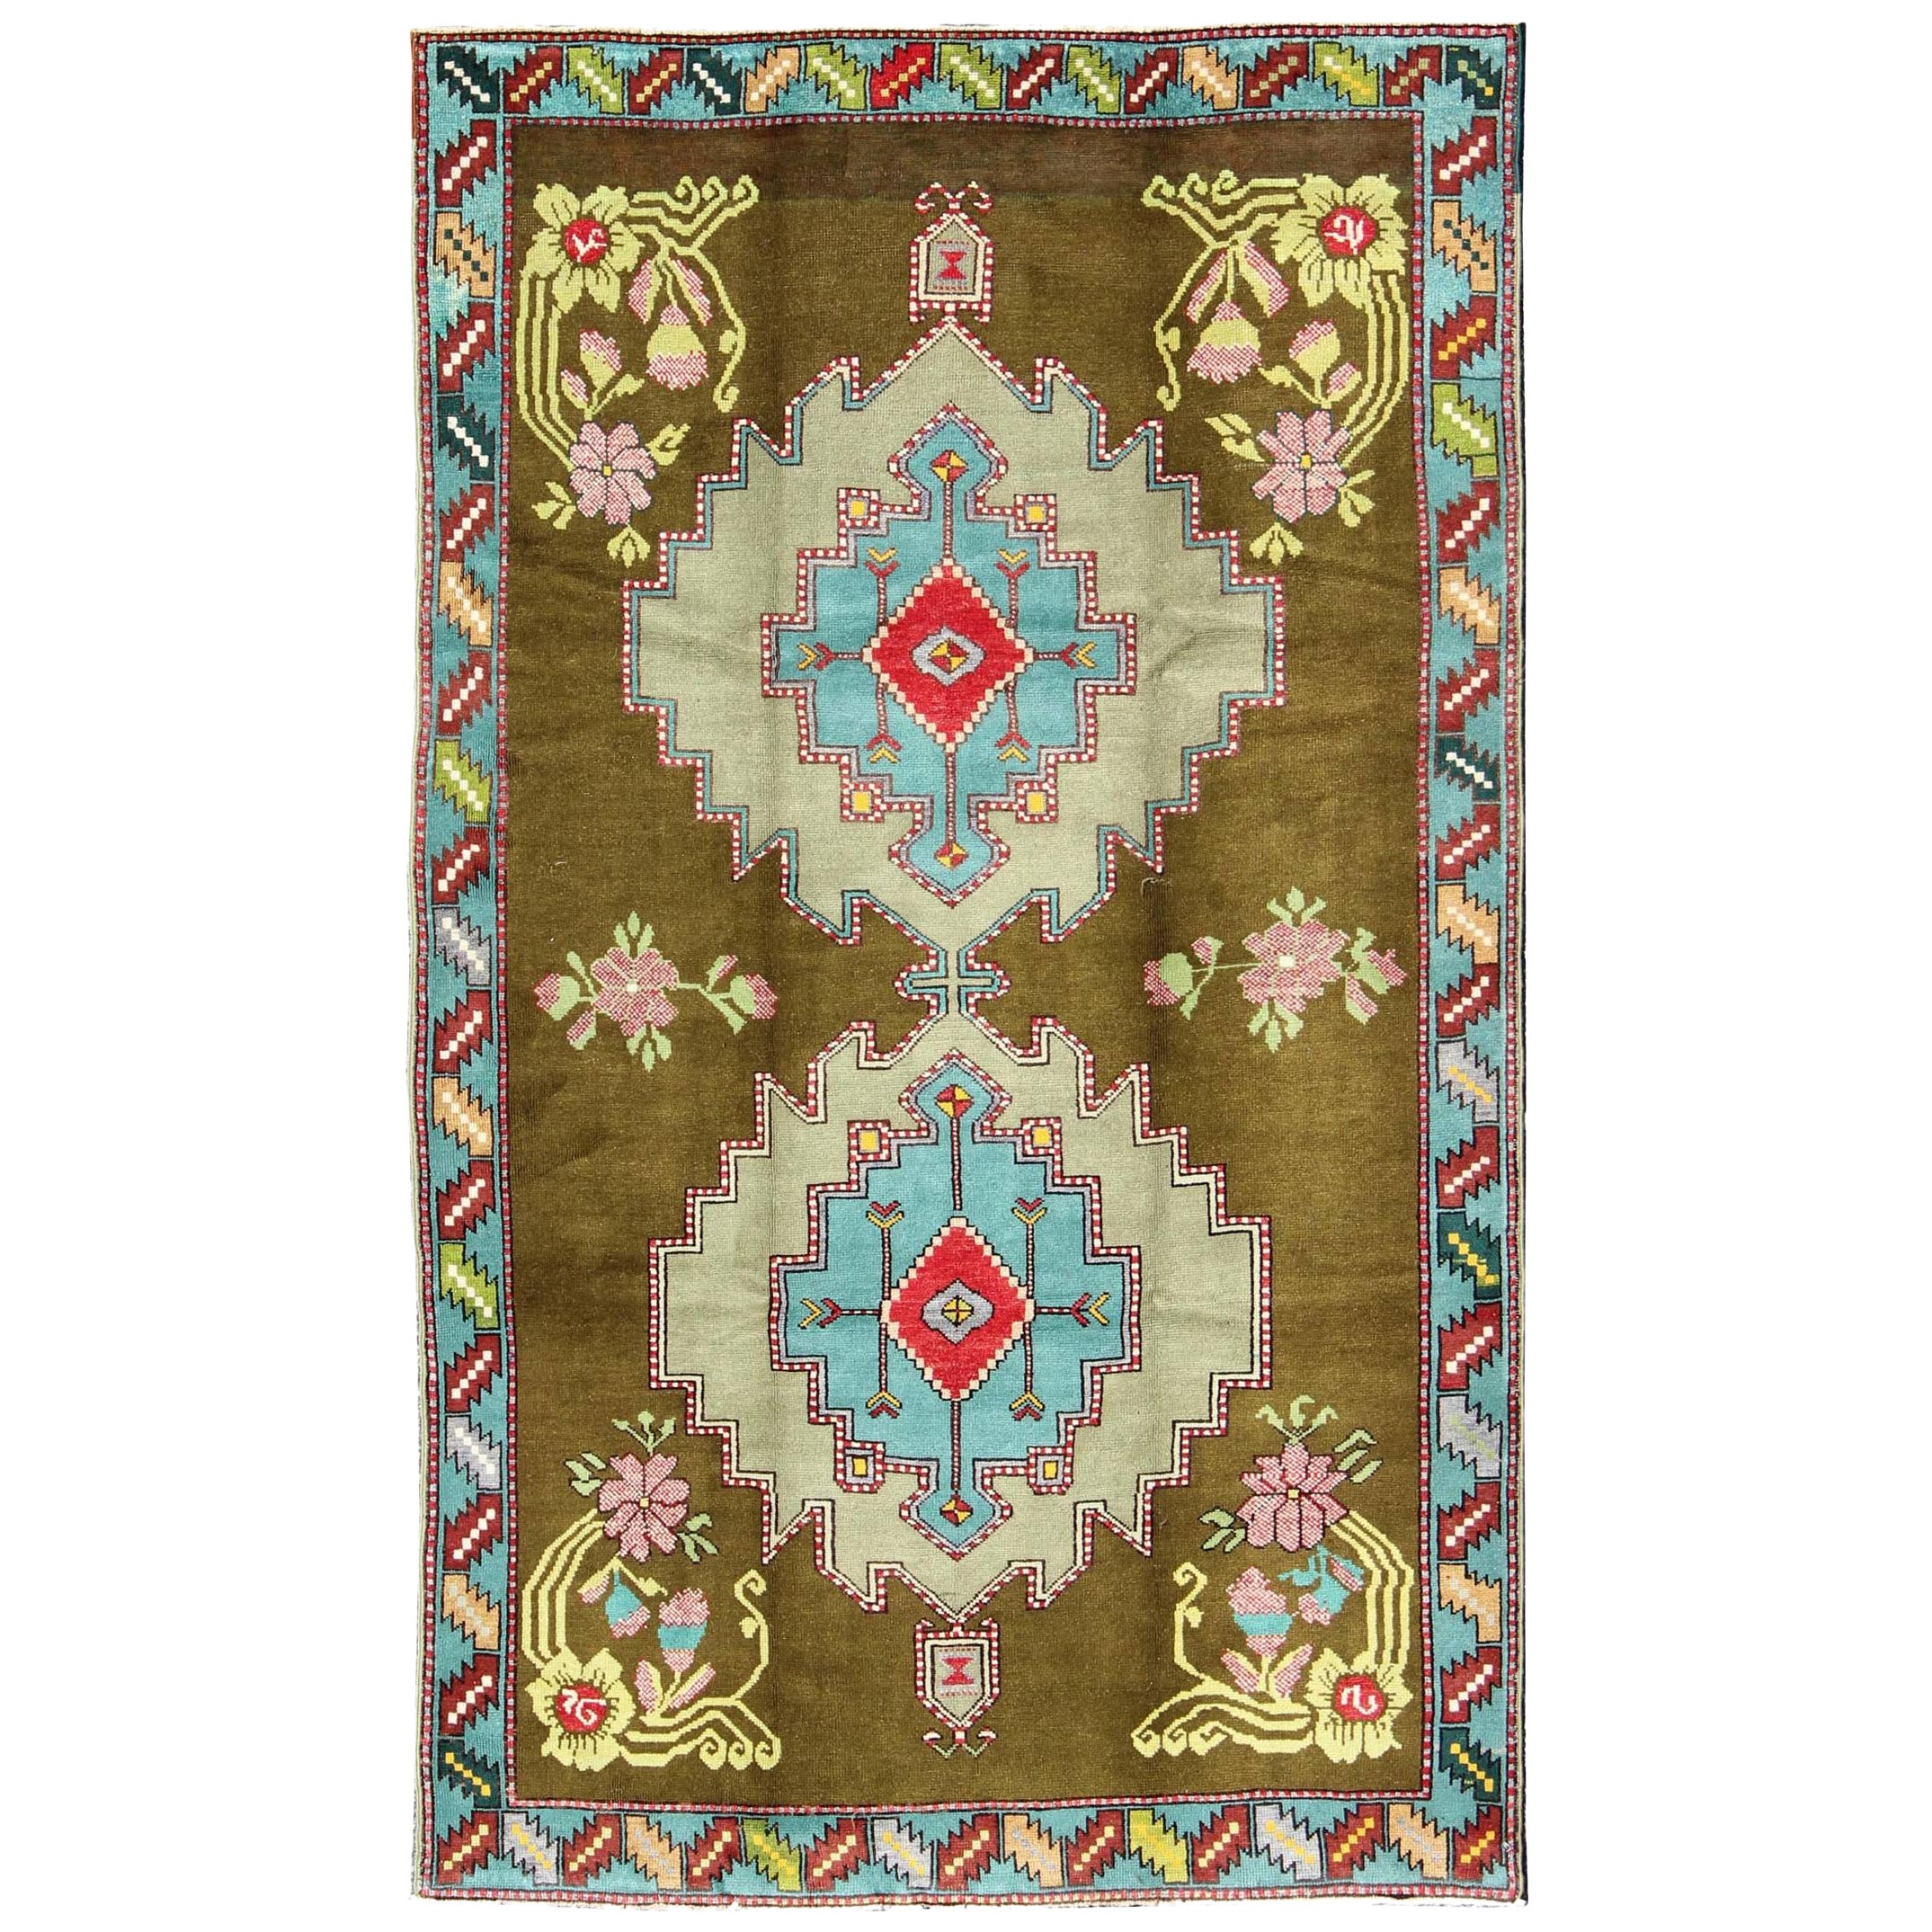 Bright Vintage Turkish Carpet in Green and Unique Vivid Colors & Design